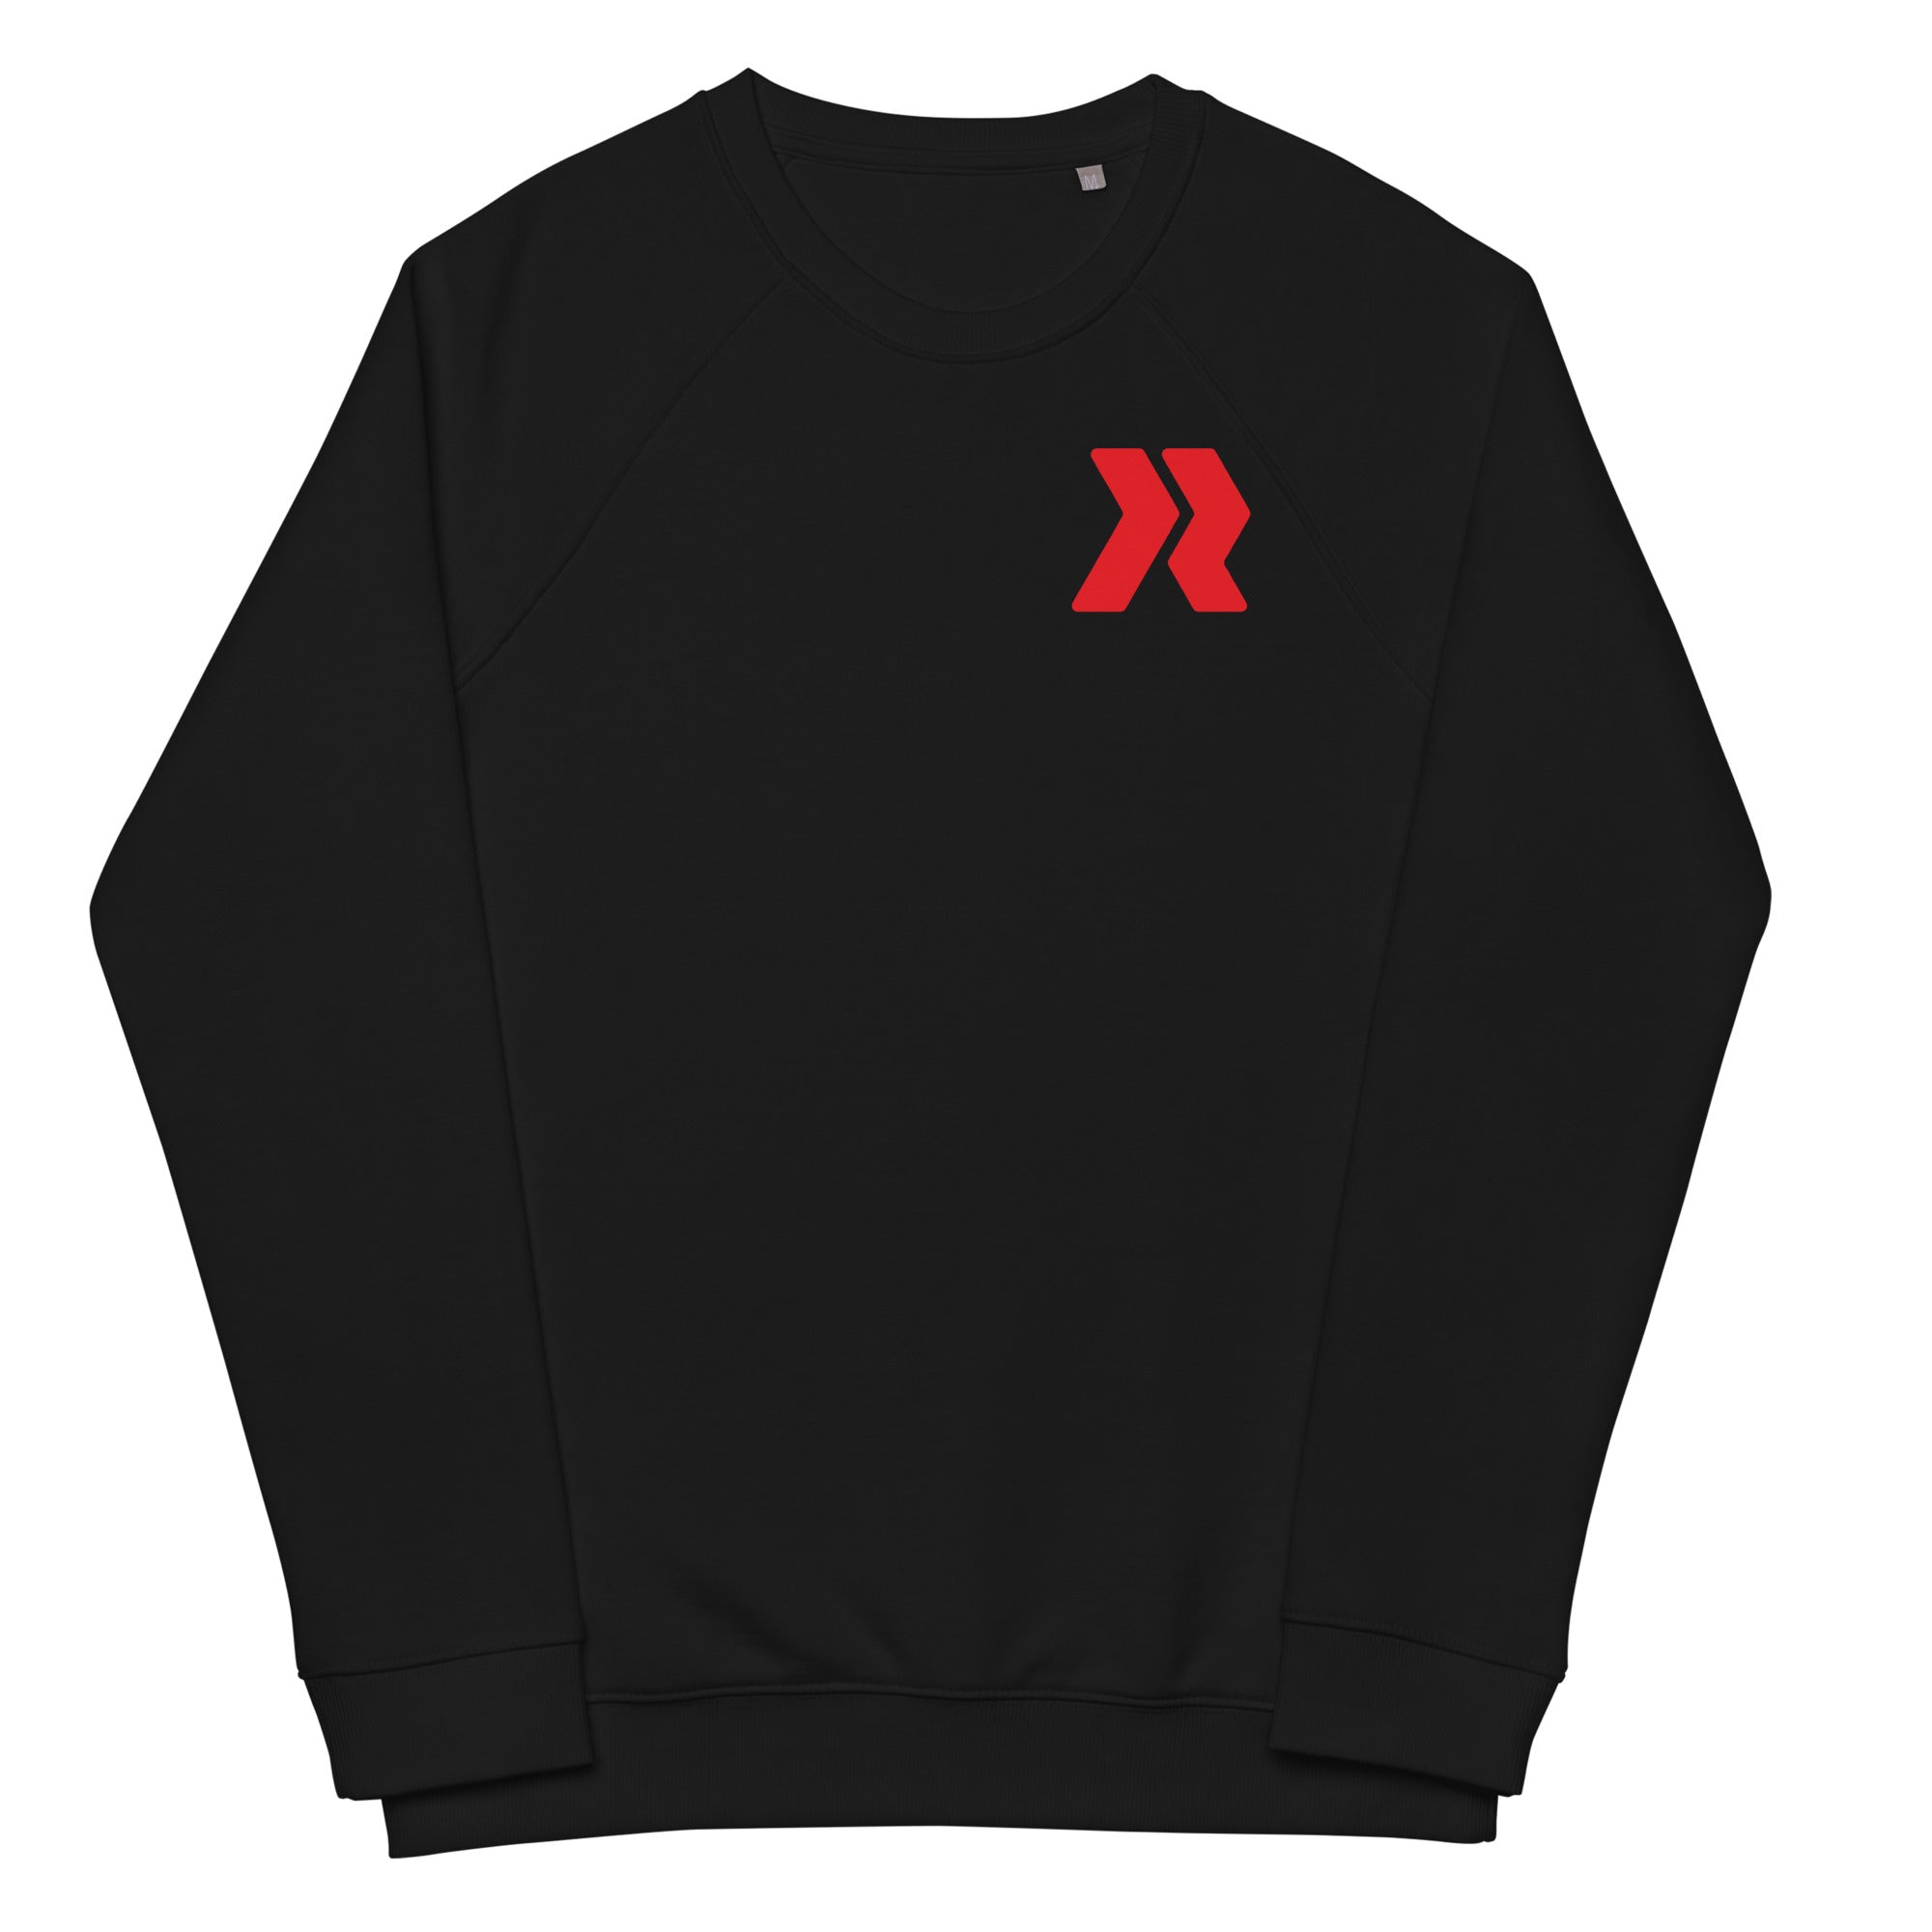 Keller Logo R - R/W - Black Unisex organic raglan sweatshirt